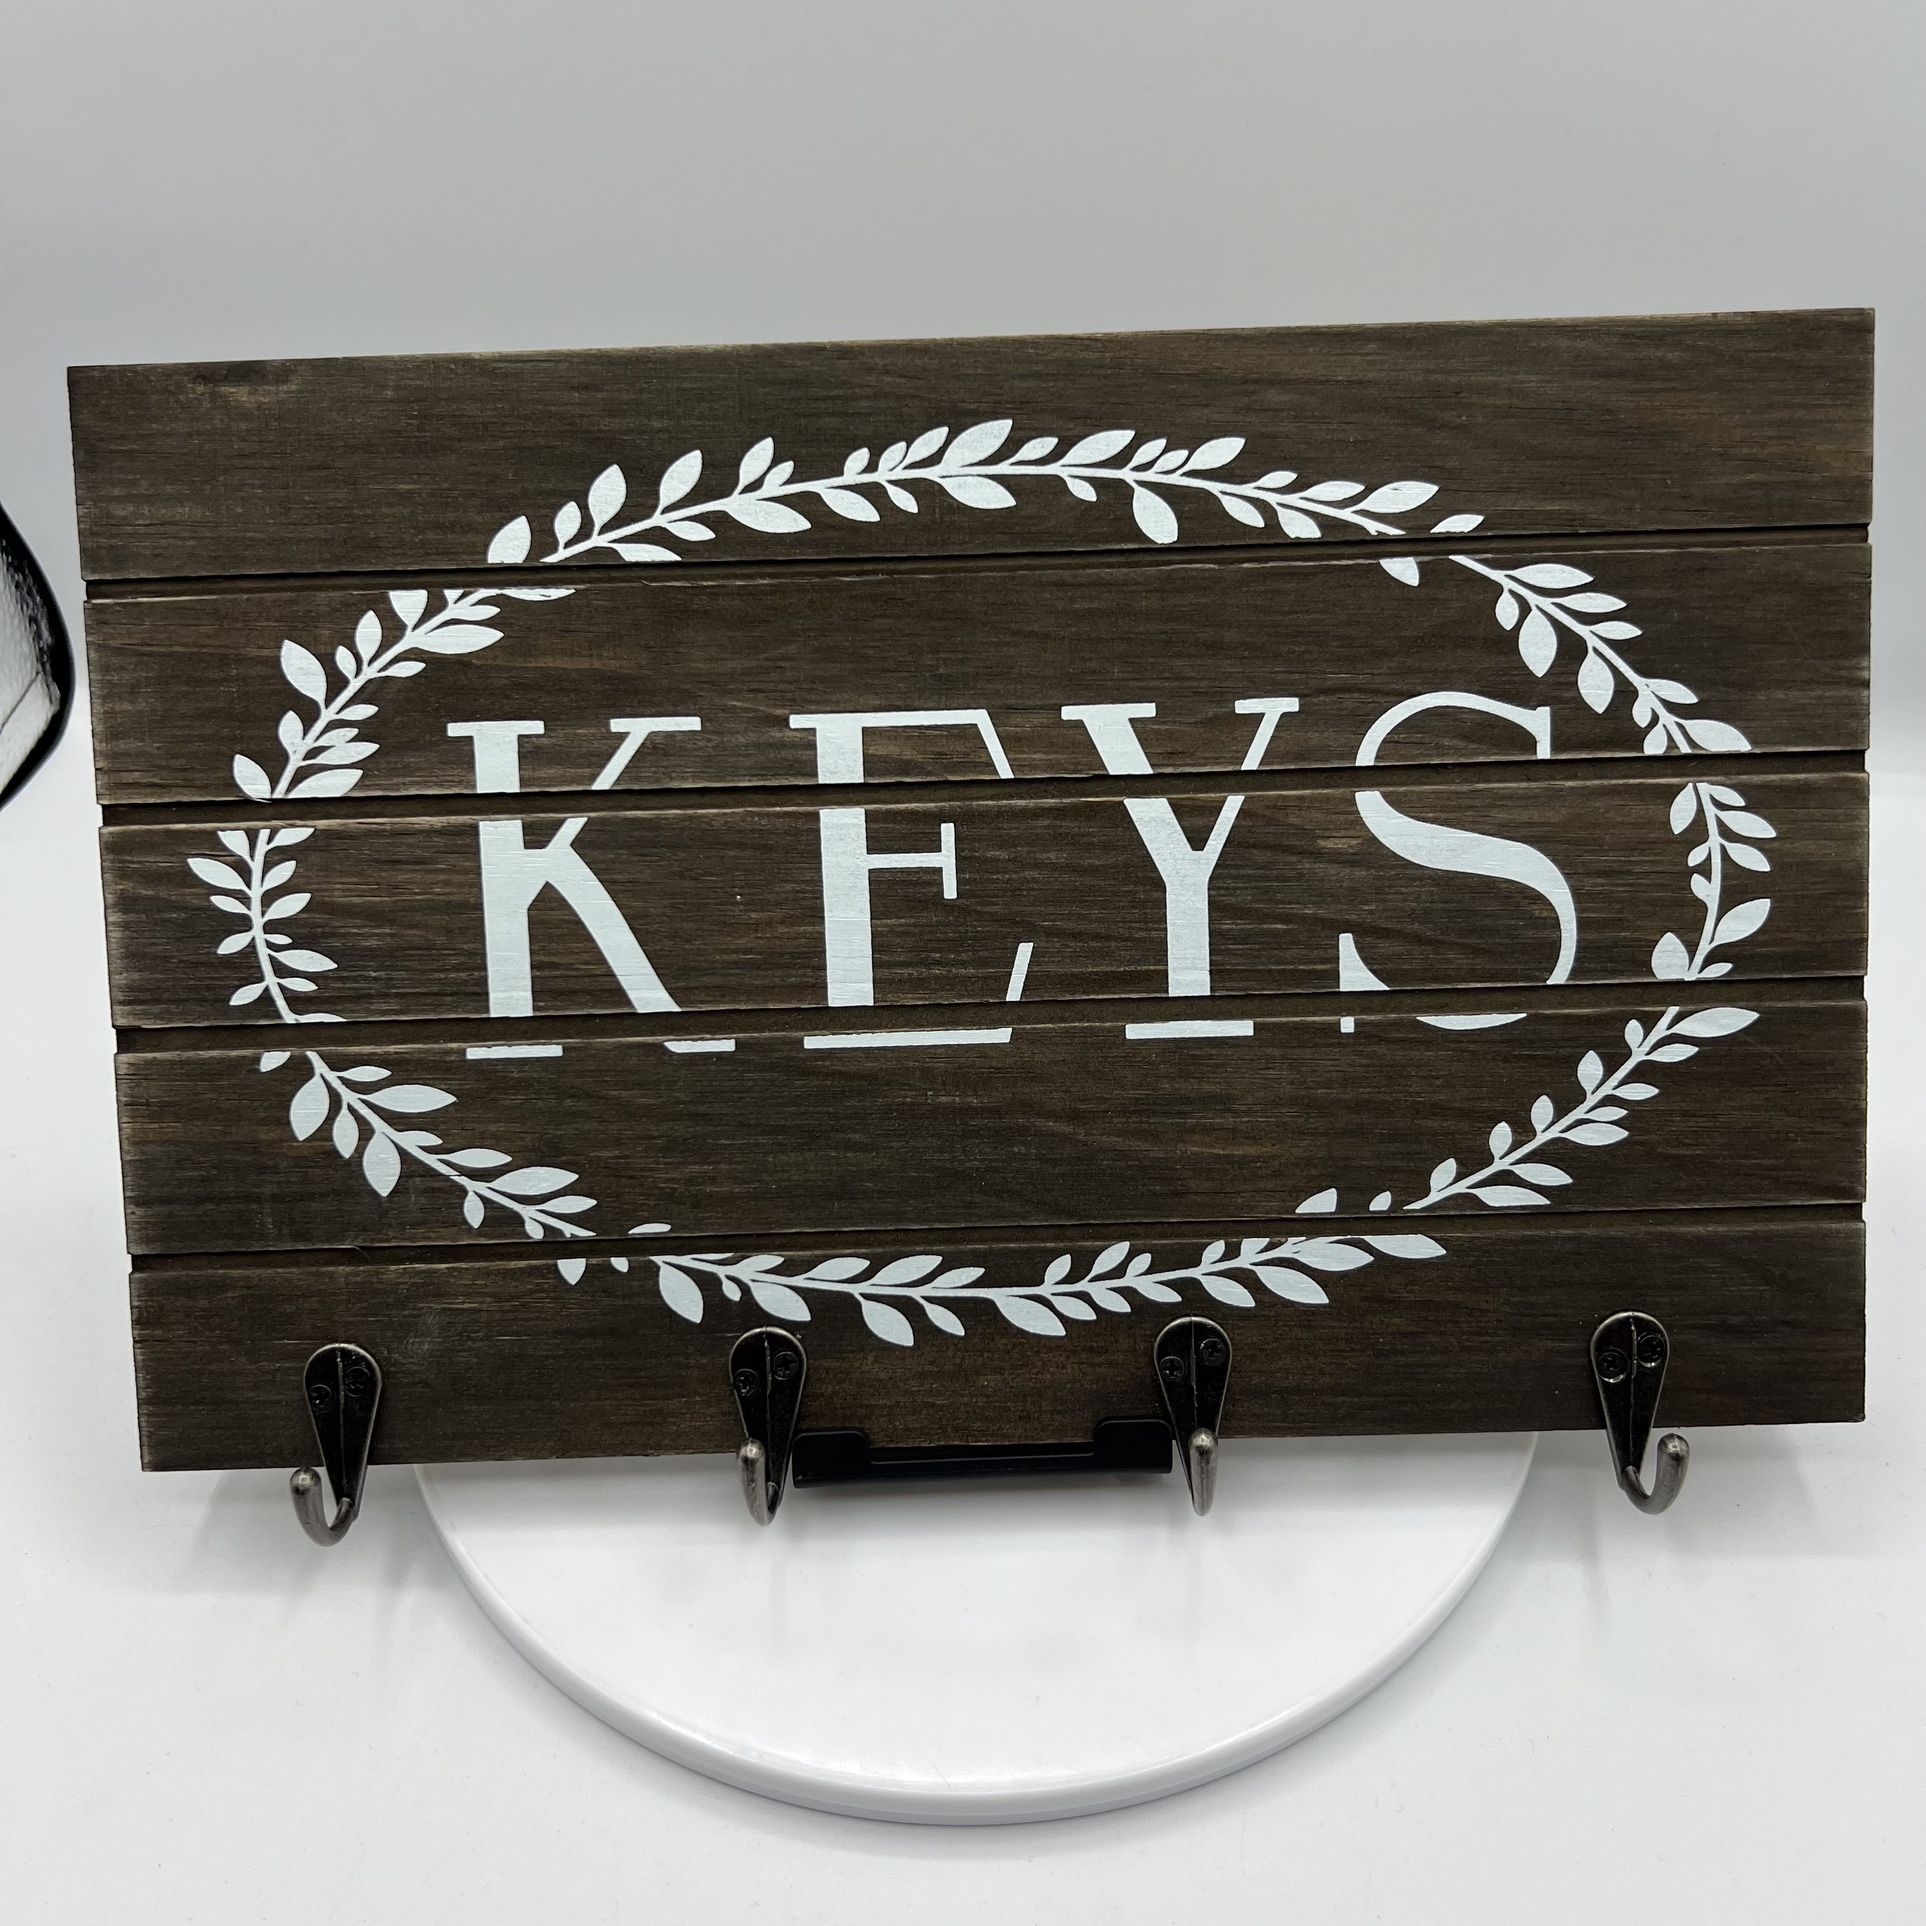 Keys Wood Plaque Hook Storage Rack Organizer 12" x 8" New